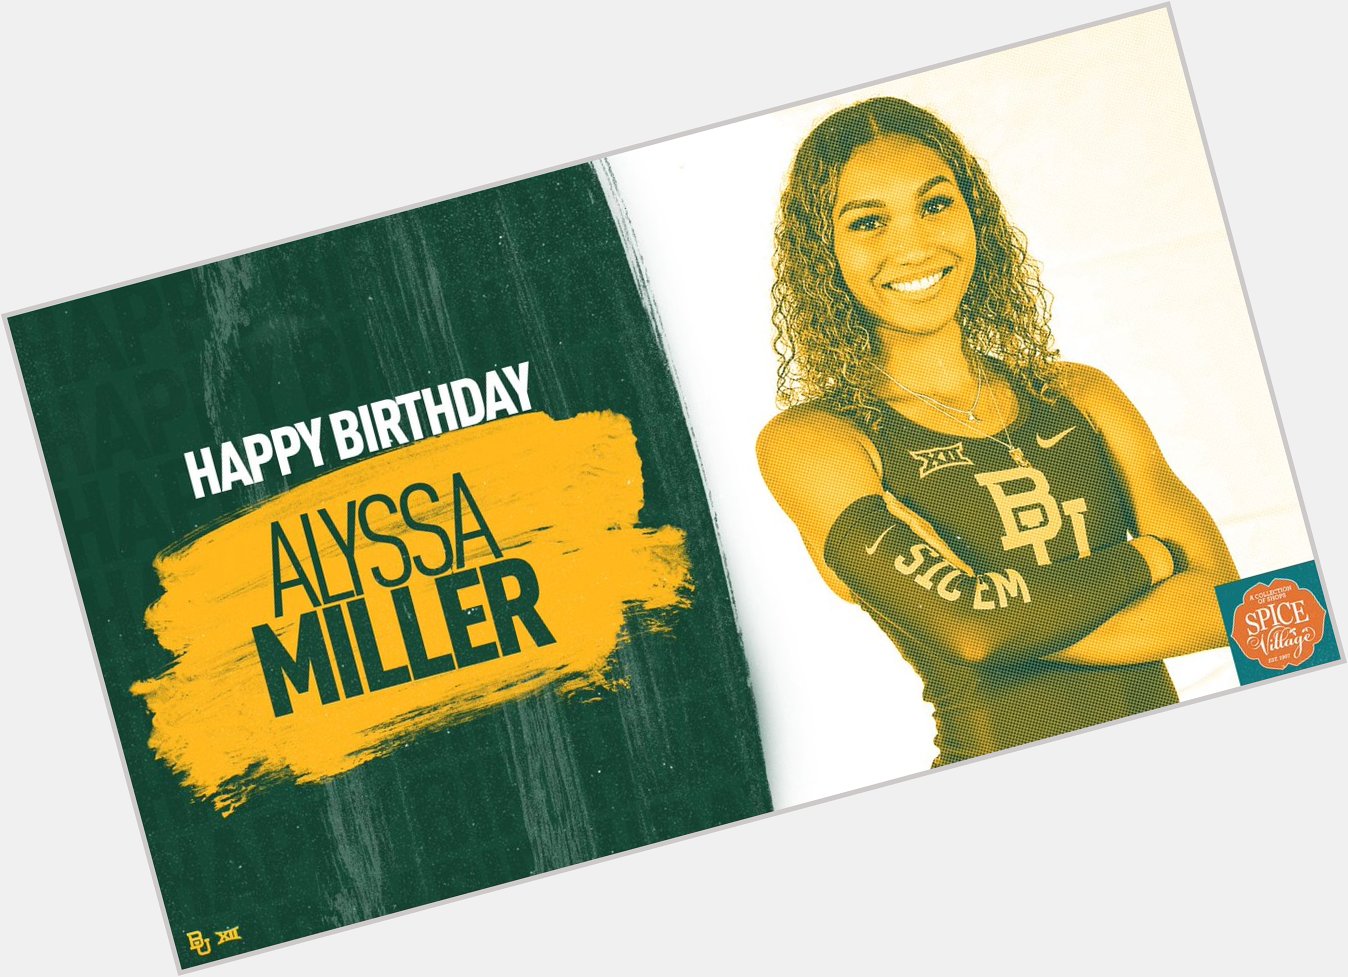    Join us in wishing sophomore Alyssa Miller a Happy Birthday!  